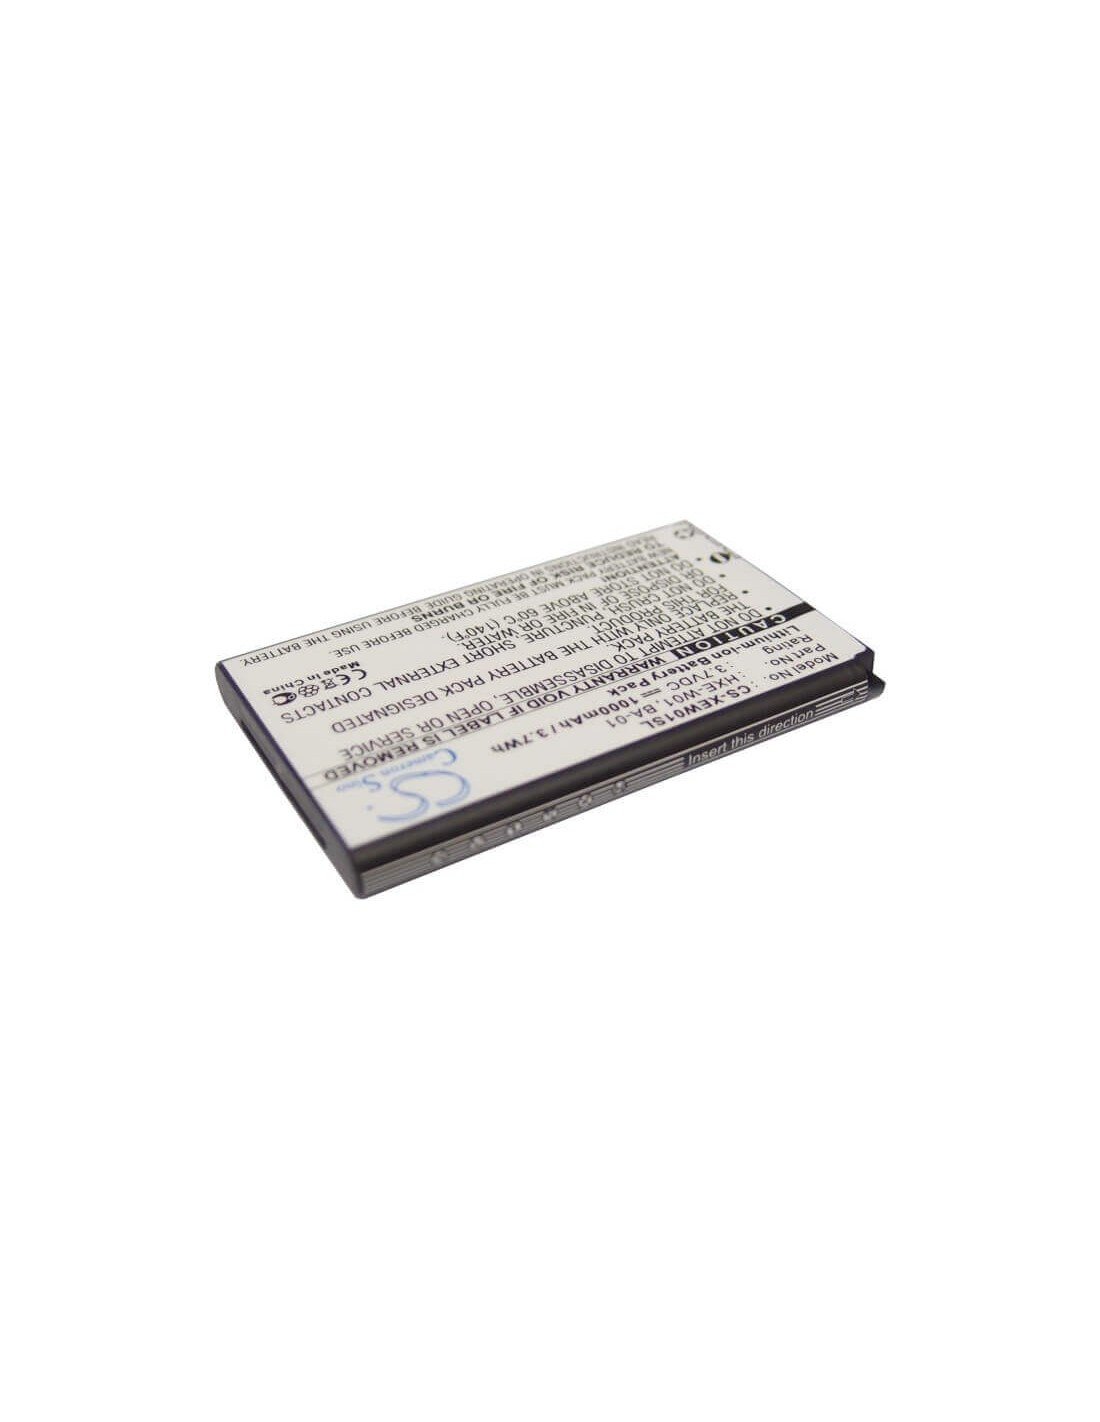 Battery for Altina Bluetooth Gps Receiver, B&b, Ps-3100 3.7V, 1000mAh - 3.70Wh